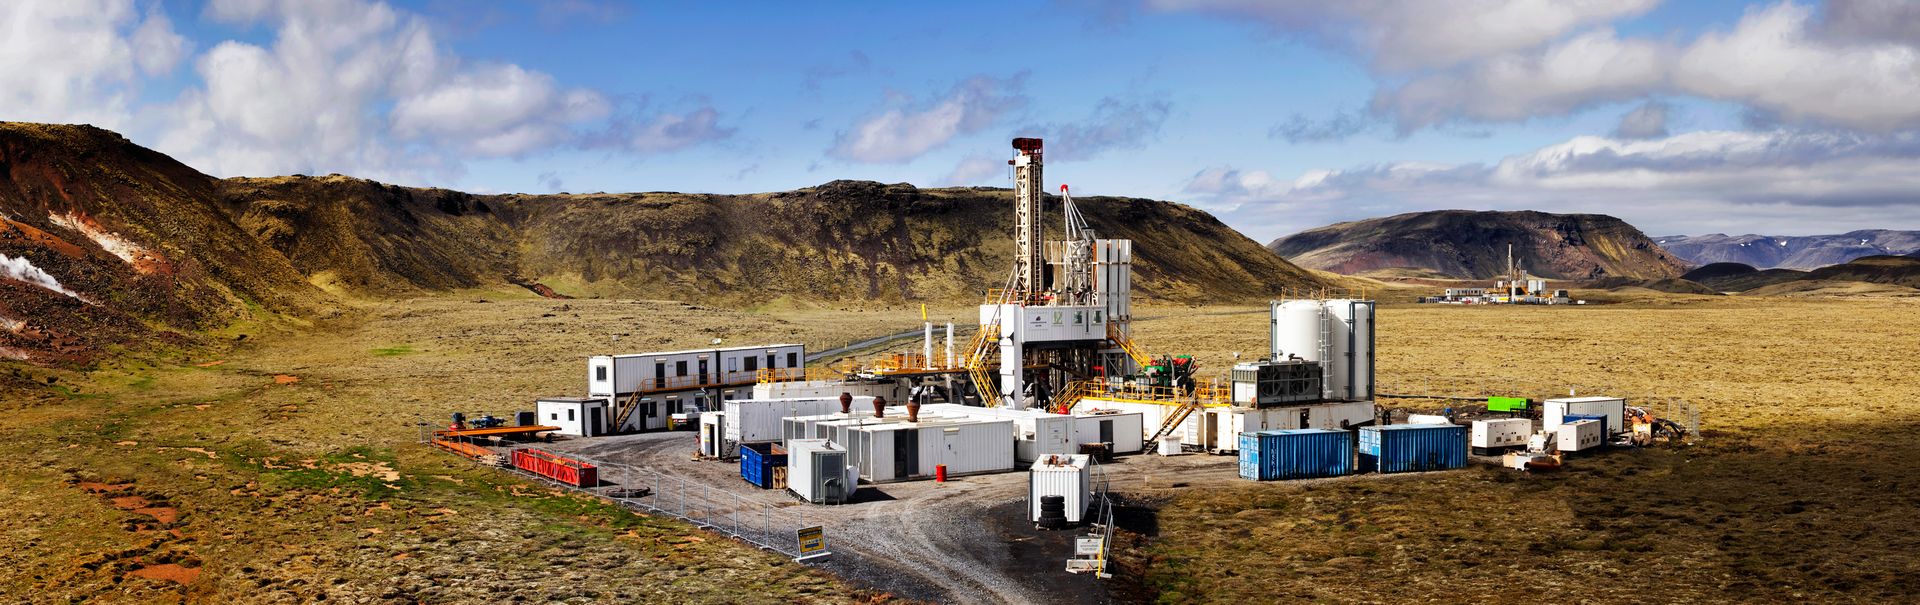 Iceland Drilling Company Ltd. (IDC)